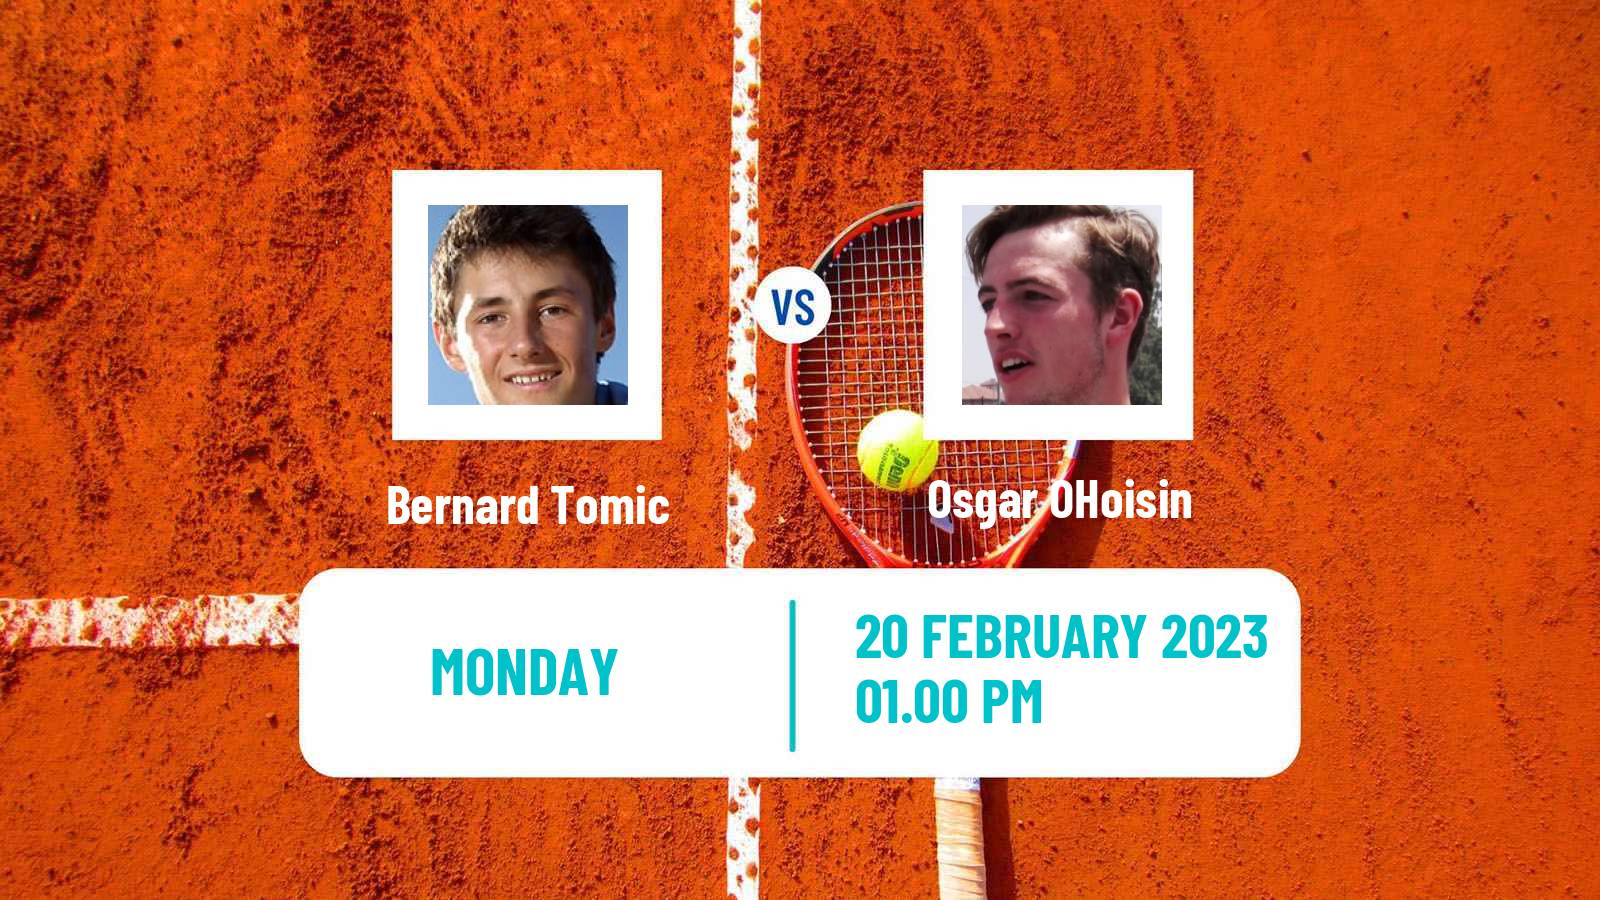 Tennis ATP Challenger Bernard Tomic - Osgar OHoisin